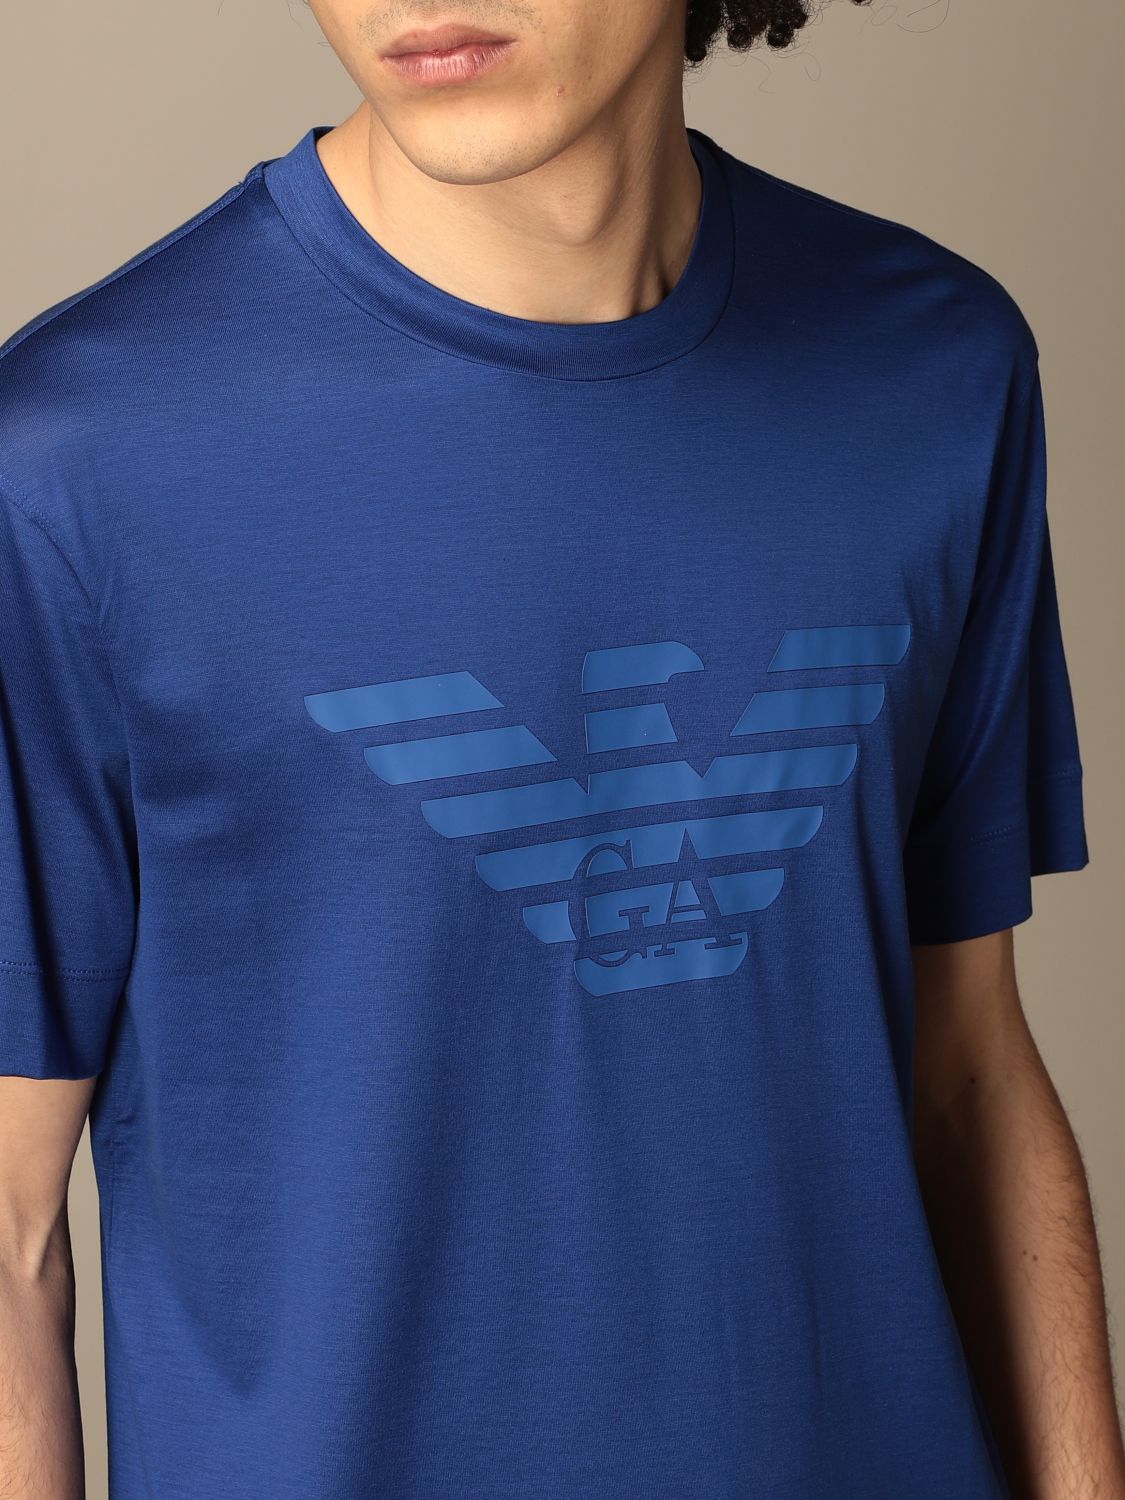 EMPORIO ARMANI: Basic t-shirt with logo - Blue | T-Shirt Emporio Armani ...